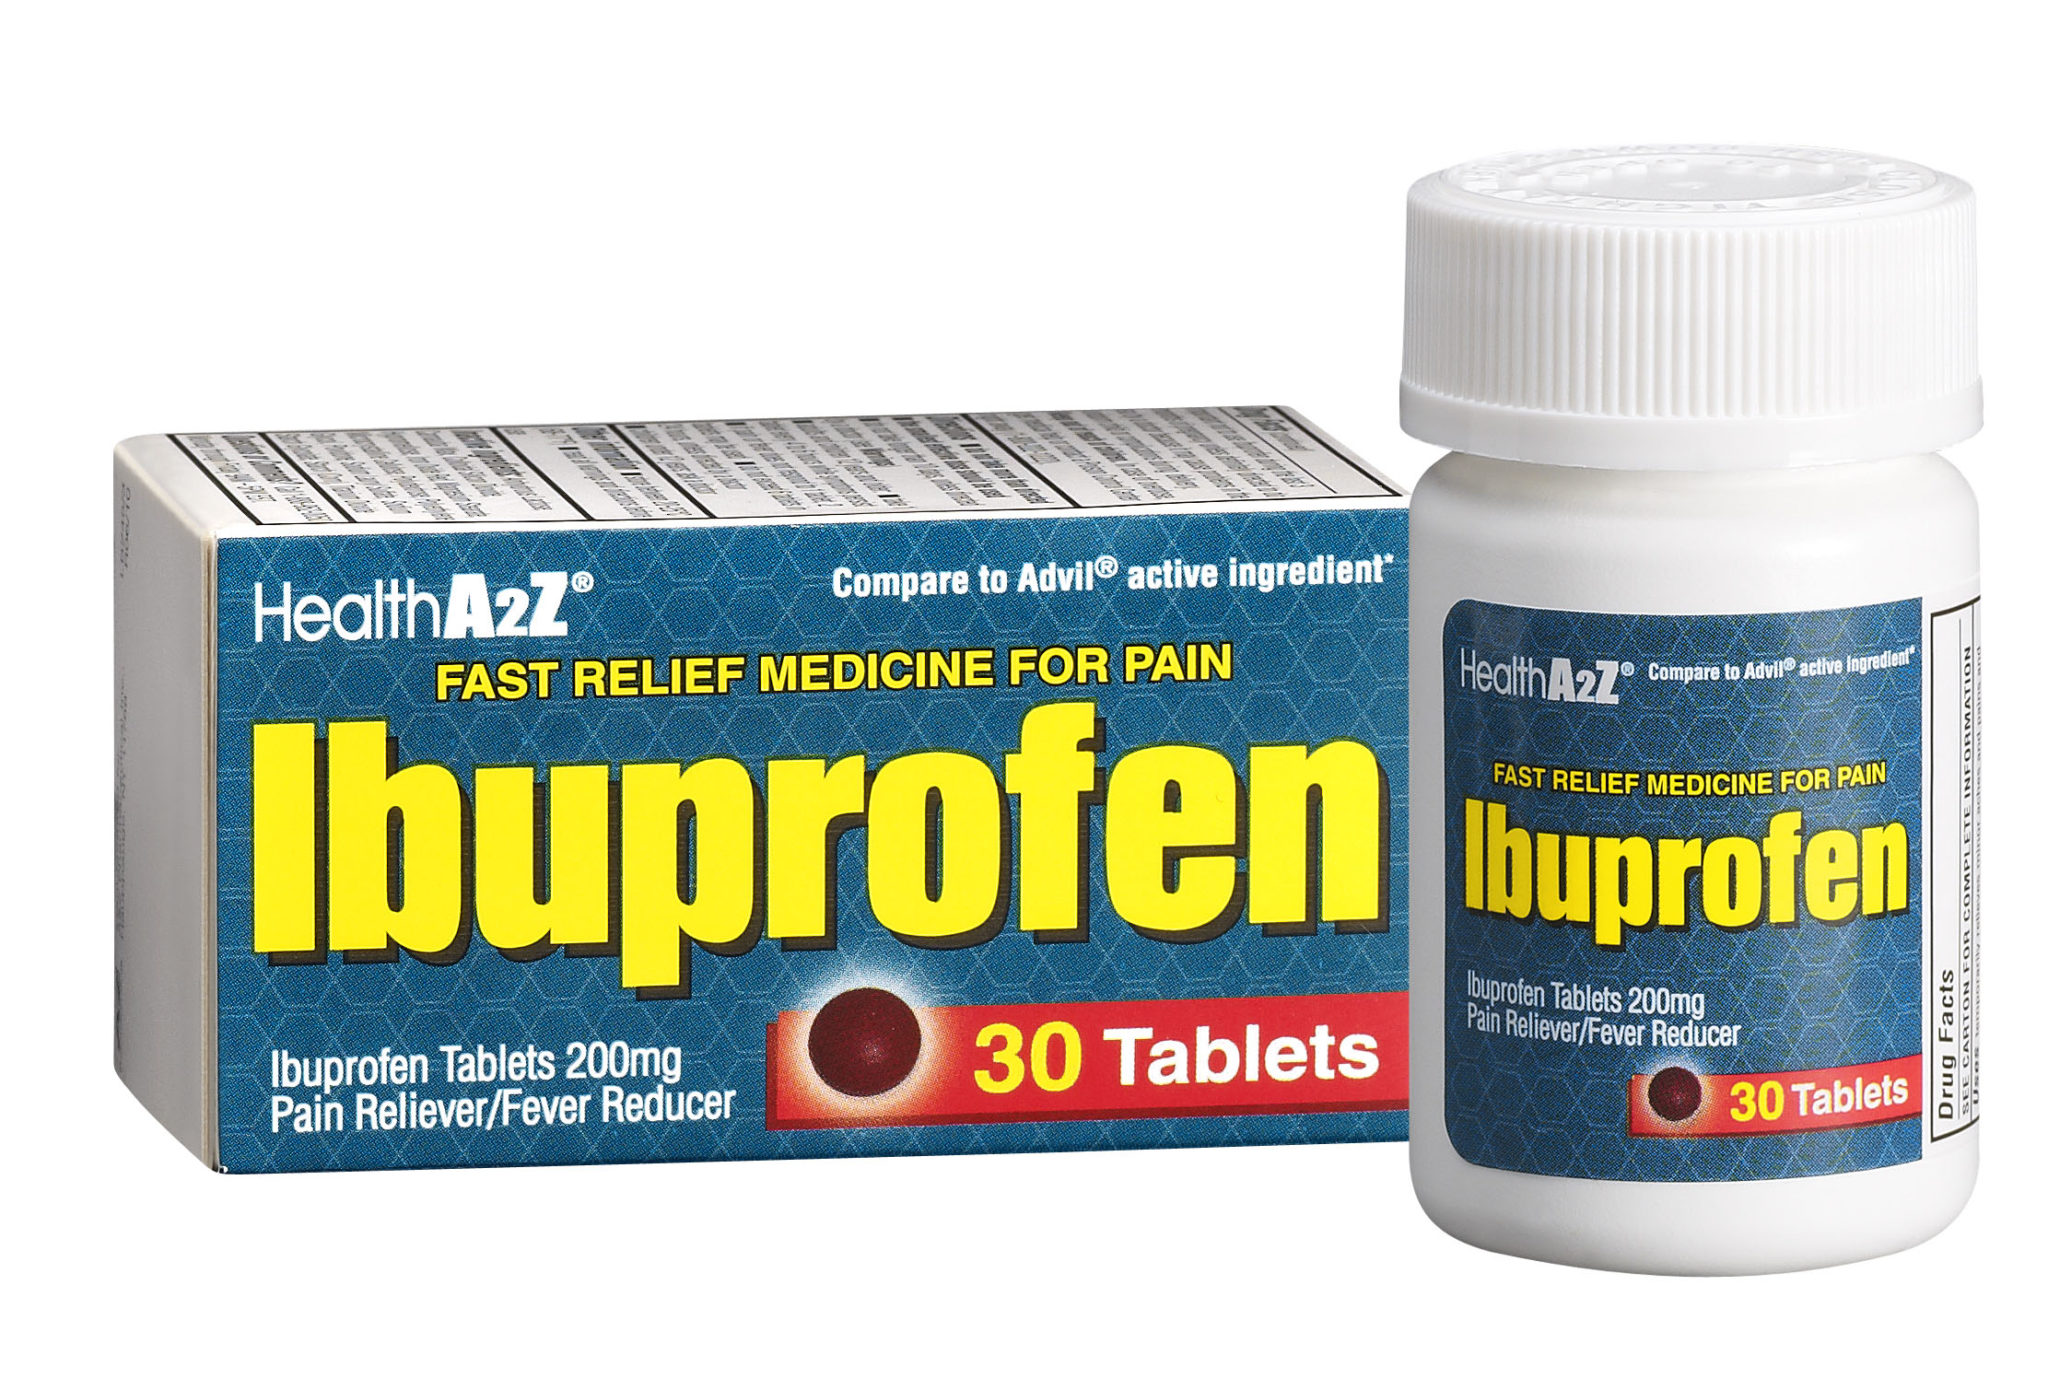 HealthA2Z Ibuprofen